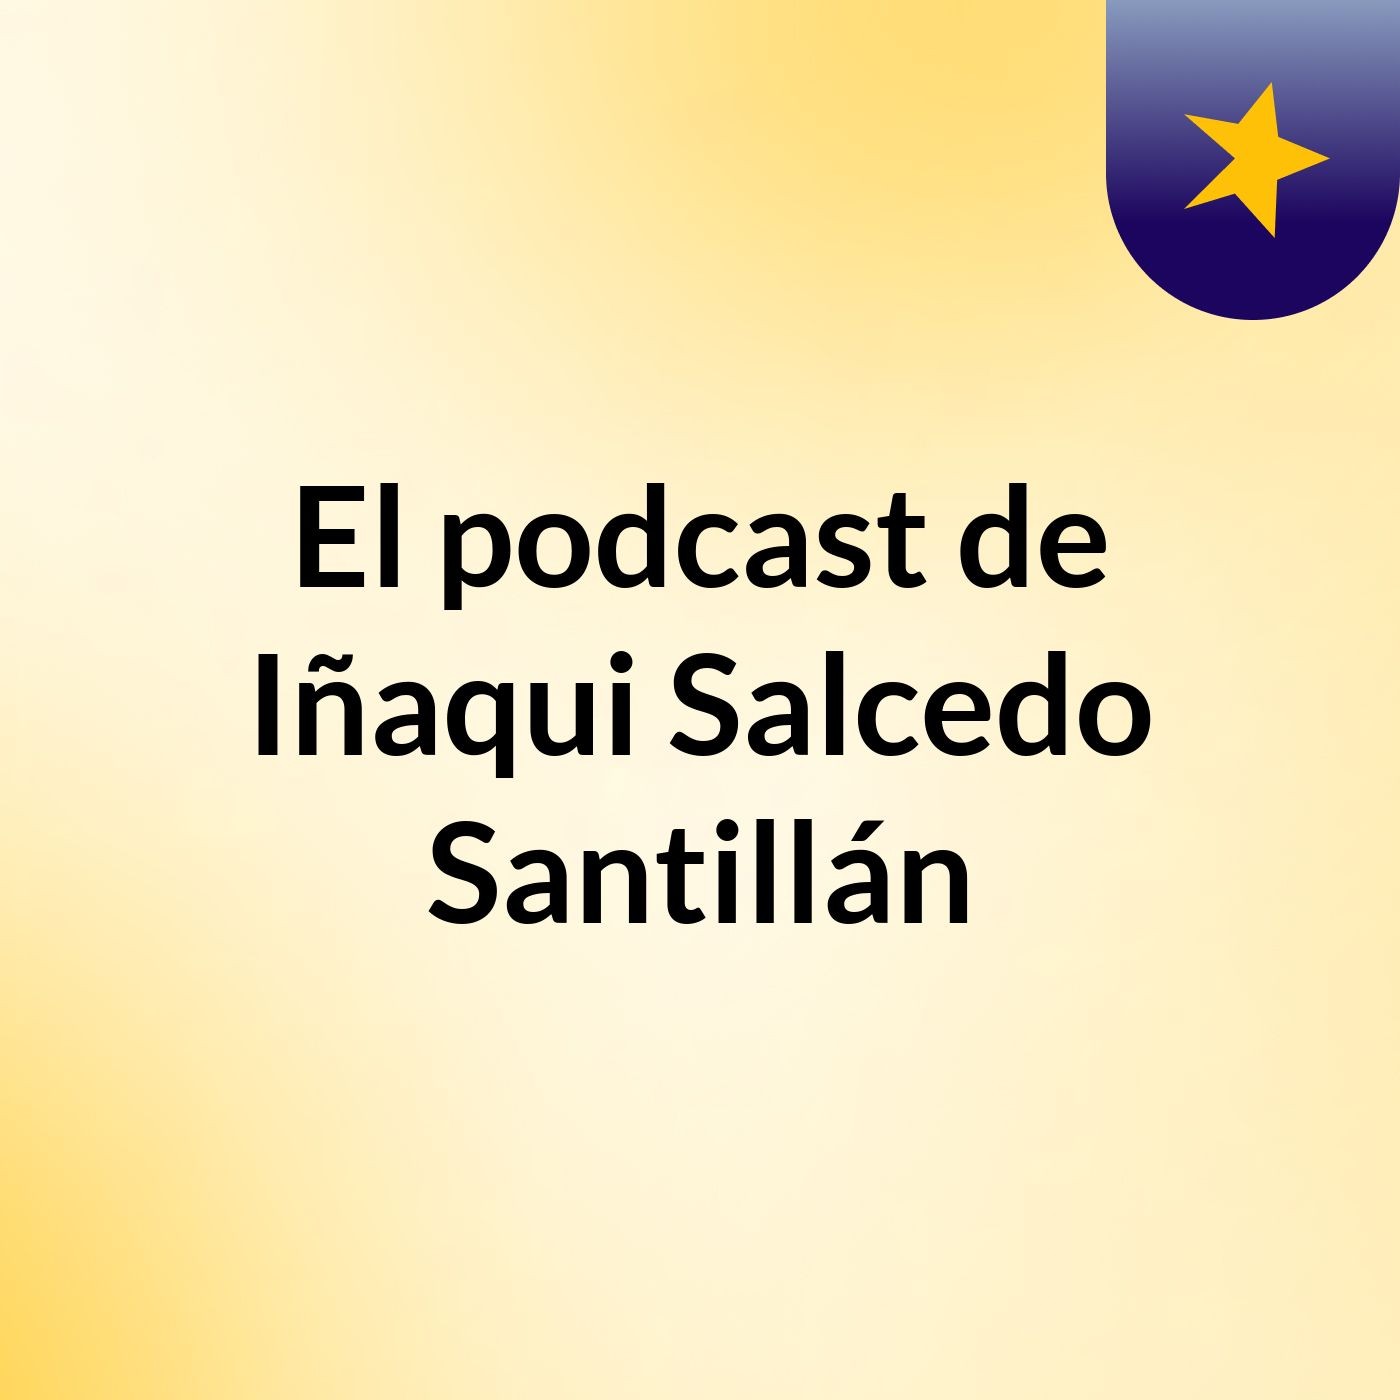 El podcast de Iñaqui Salcedo Santillán